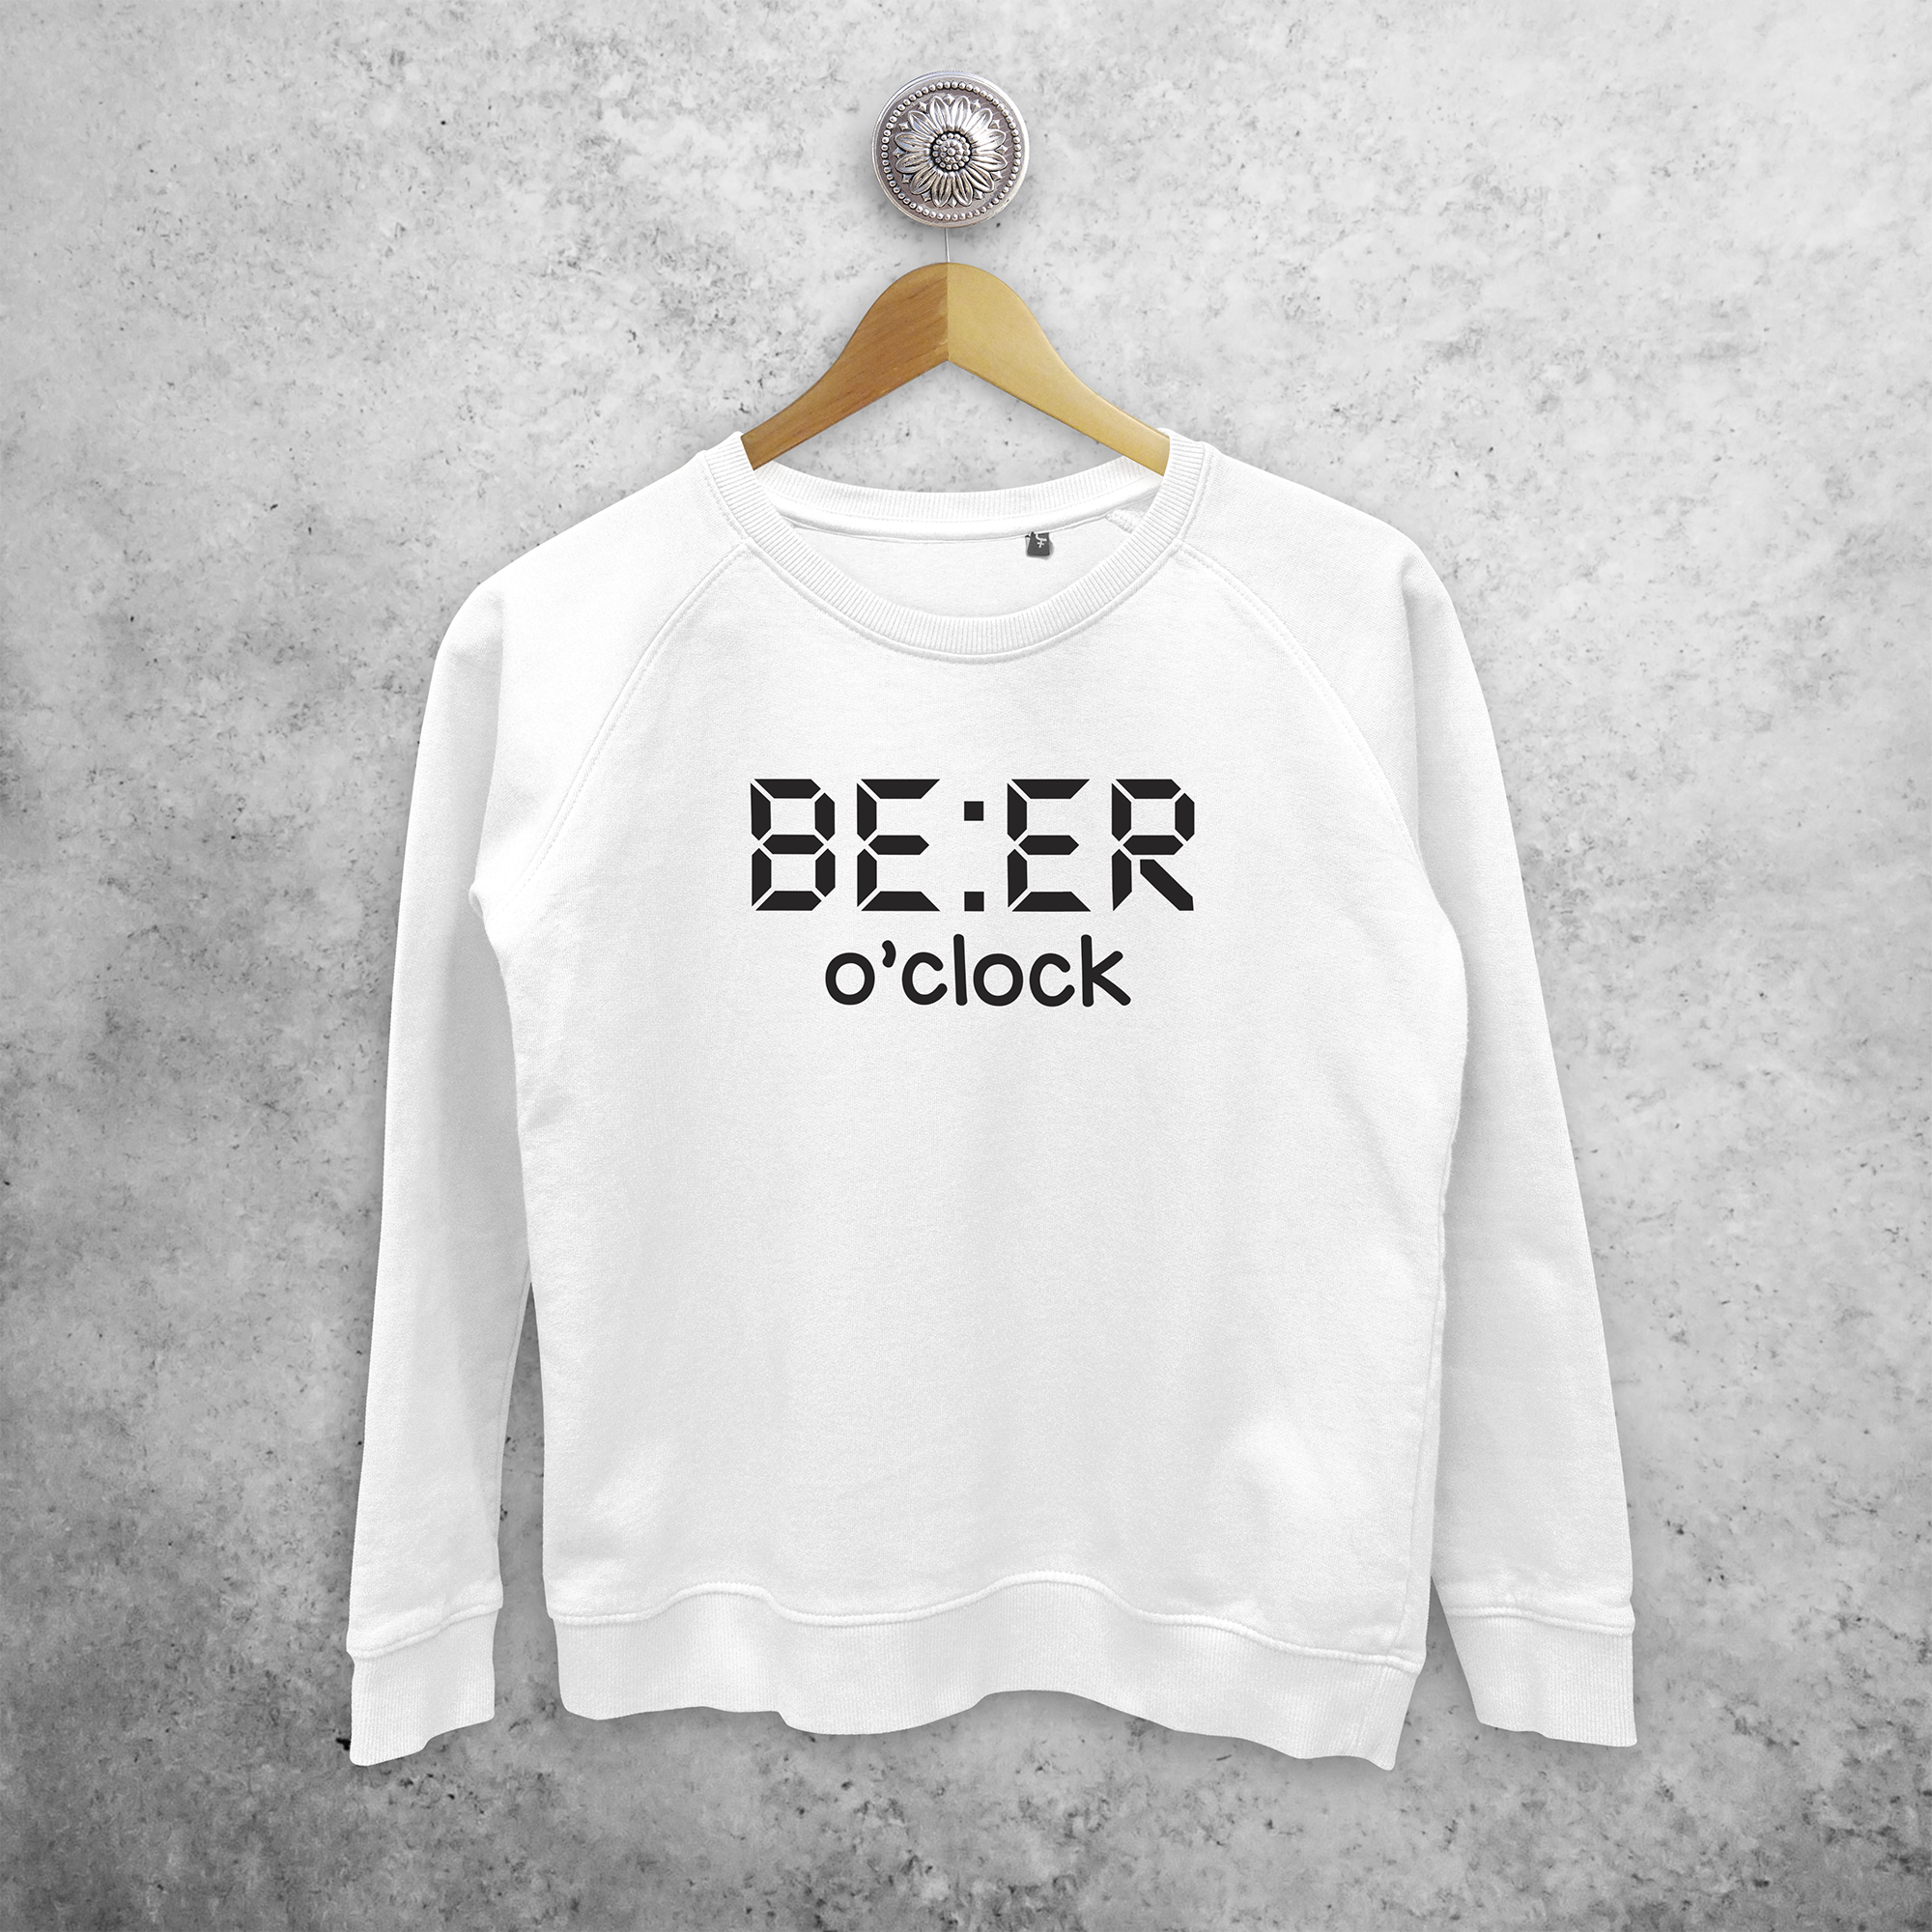 'Beer o'clock' sweater